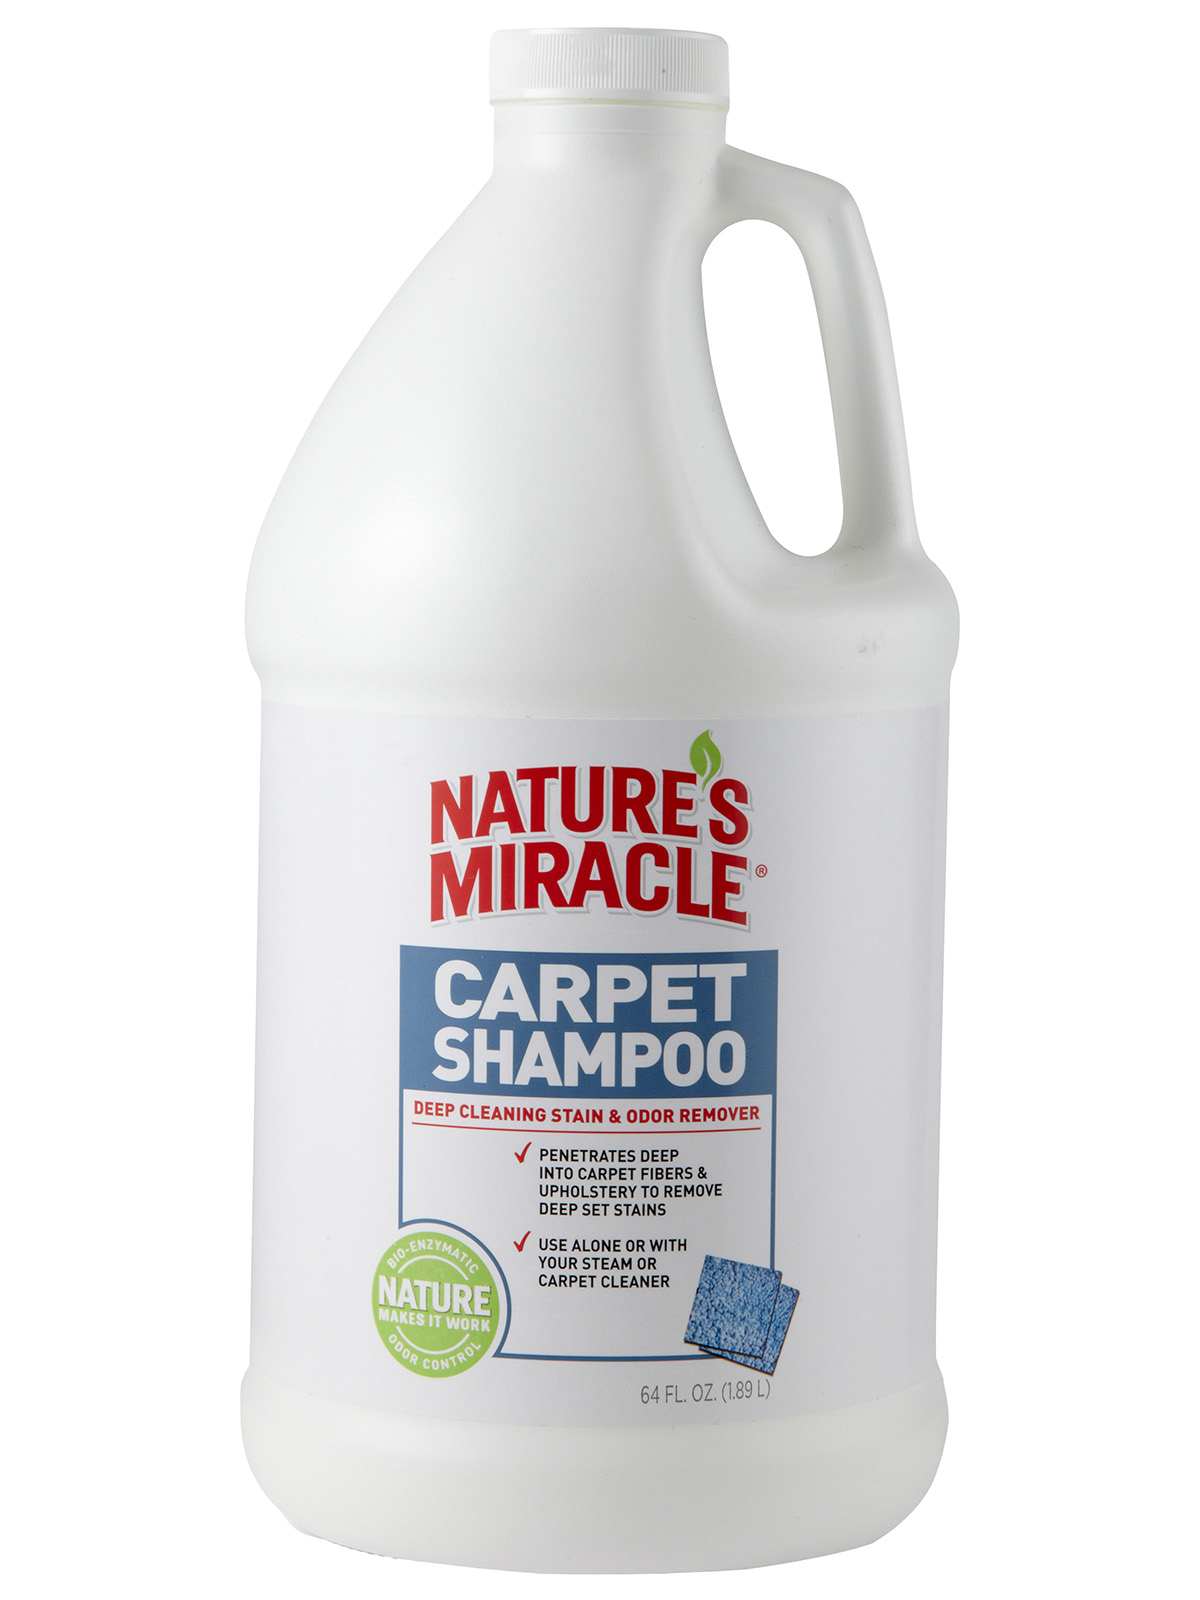 Моющее средство 8 in 1 nature's Miracle Carpet Shampoo для ковров и мягкой мебели с нейтрализаторами аллергенов 1,9 л. Carpet Shampoo моющие средство. Удалитель запаха с мебели. Устранитель запахов.